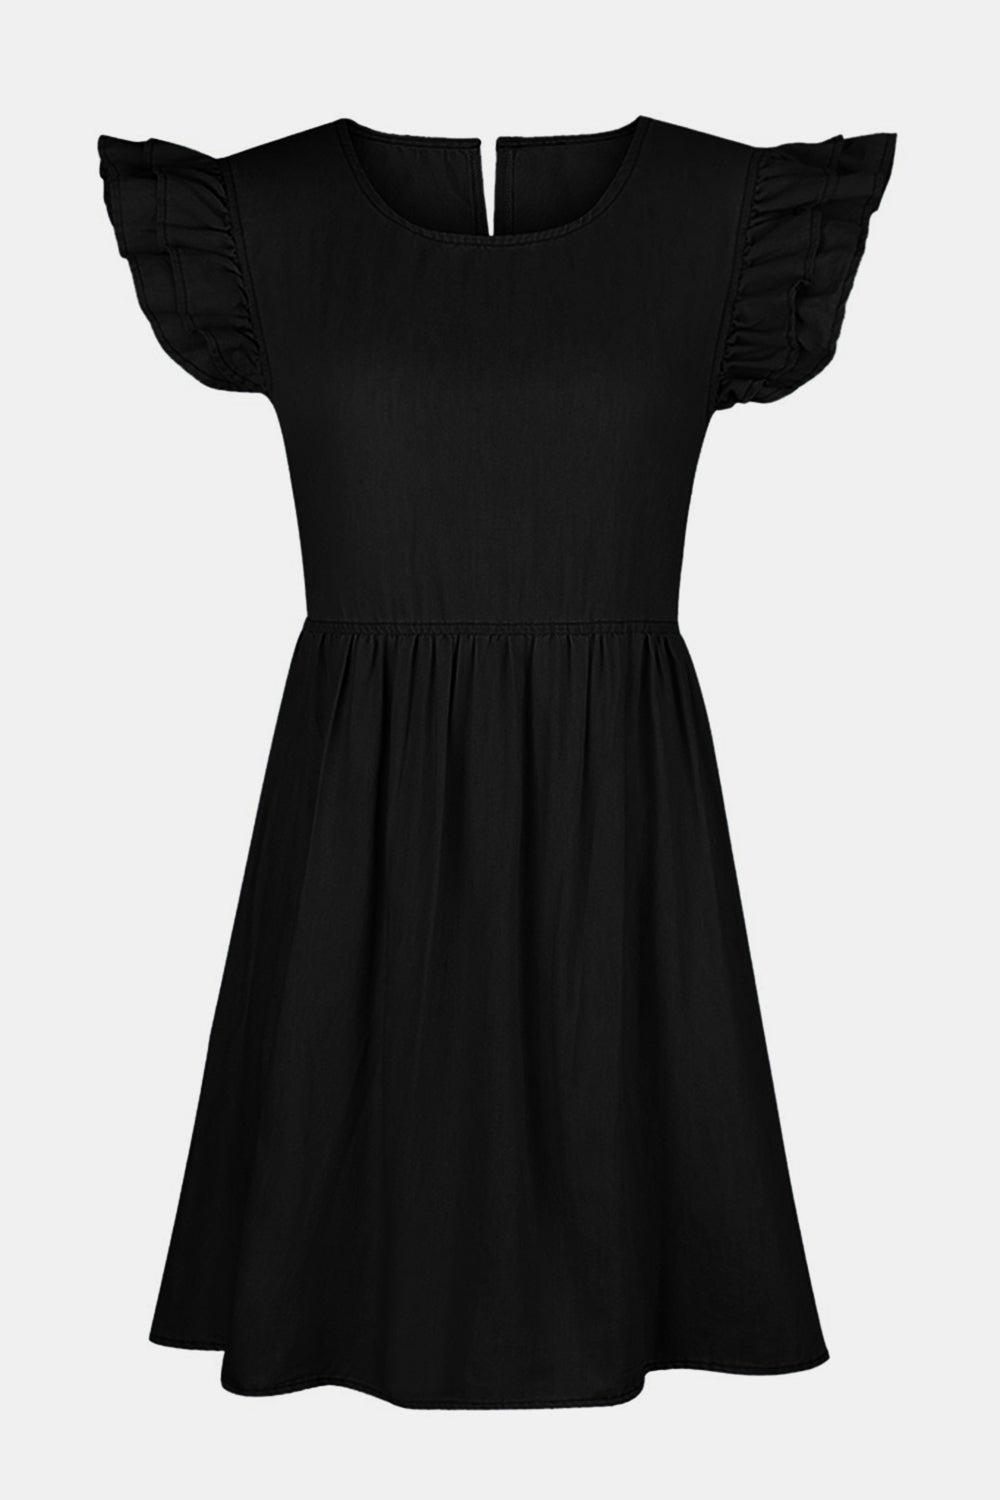 Full Size Ruffled Round Neck Cap Sleeve Denim Dress free shipping -Oh Em Gee Boutique